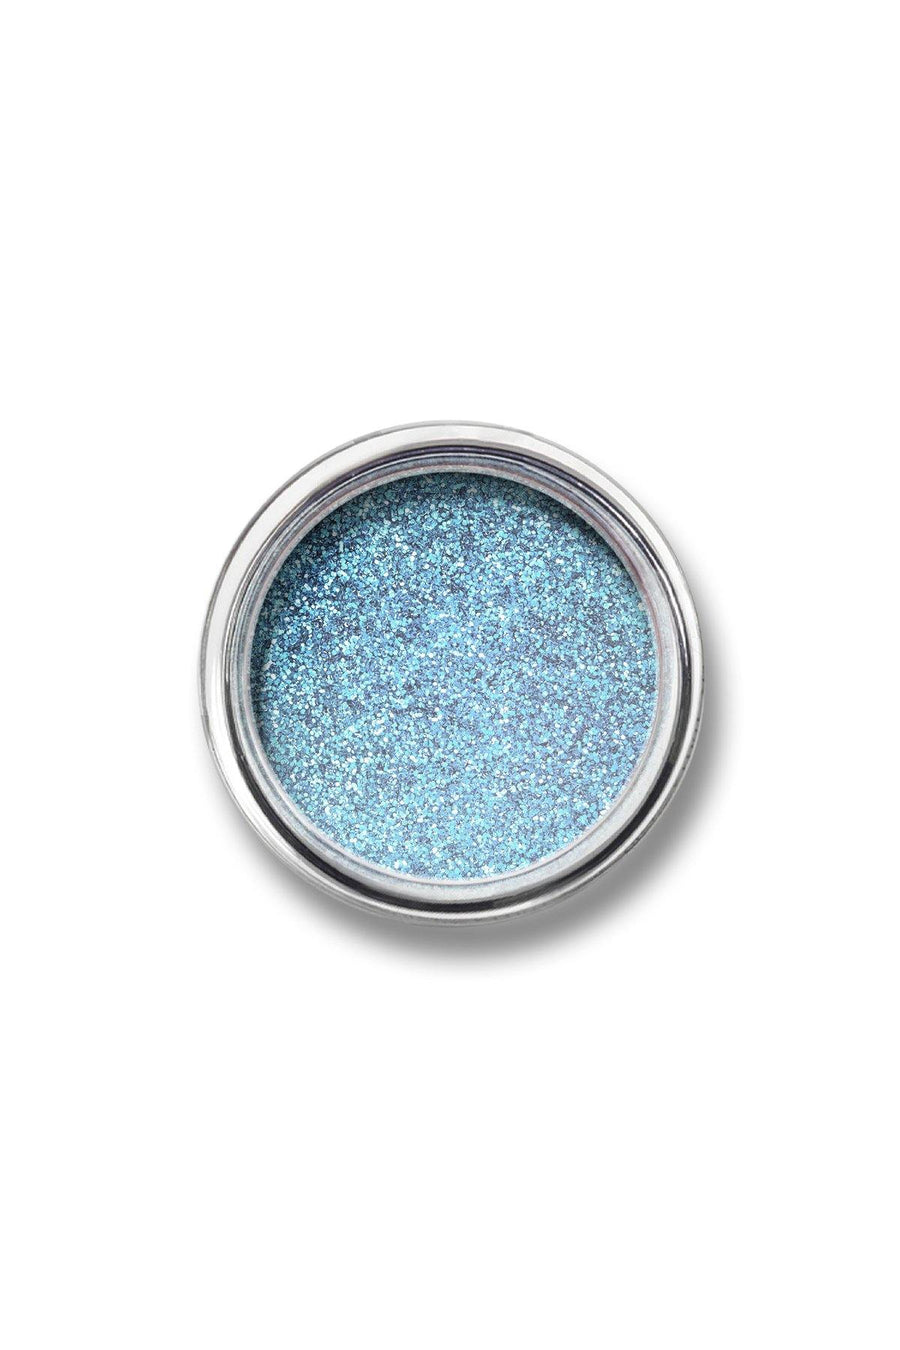 Glitter Powder #15 - Baby Blue - Blend Mineral Cosmetics